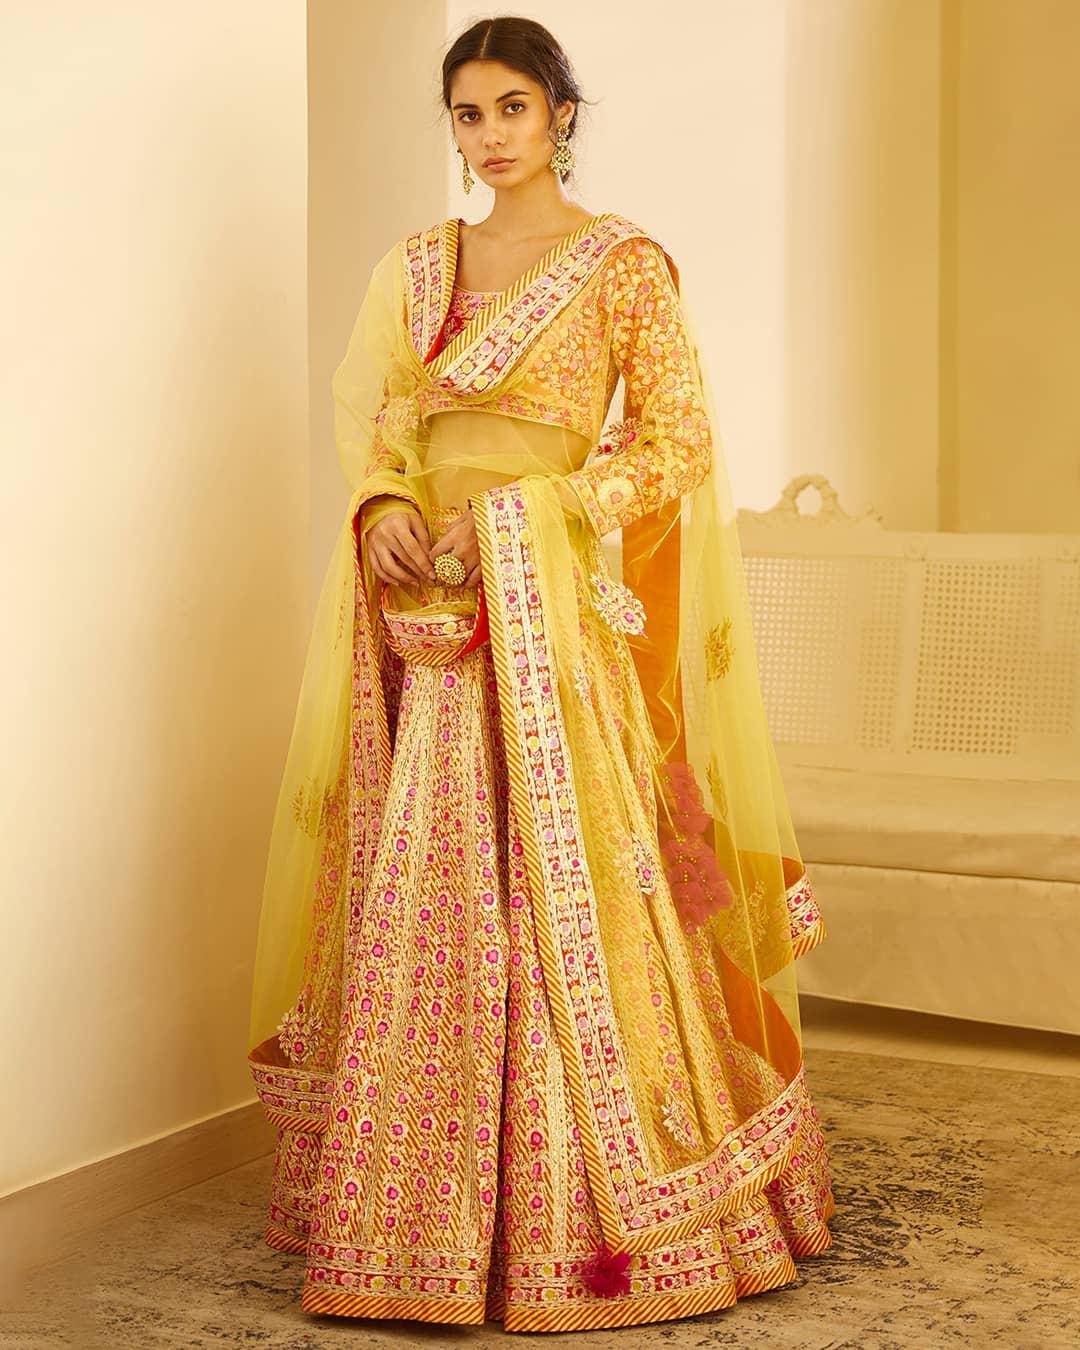 Latest Karvachauth Collection: Buy Latest Indian Designer Karvachauth Sarees  Online - Utsav Fashion